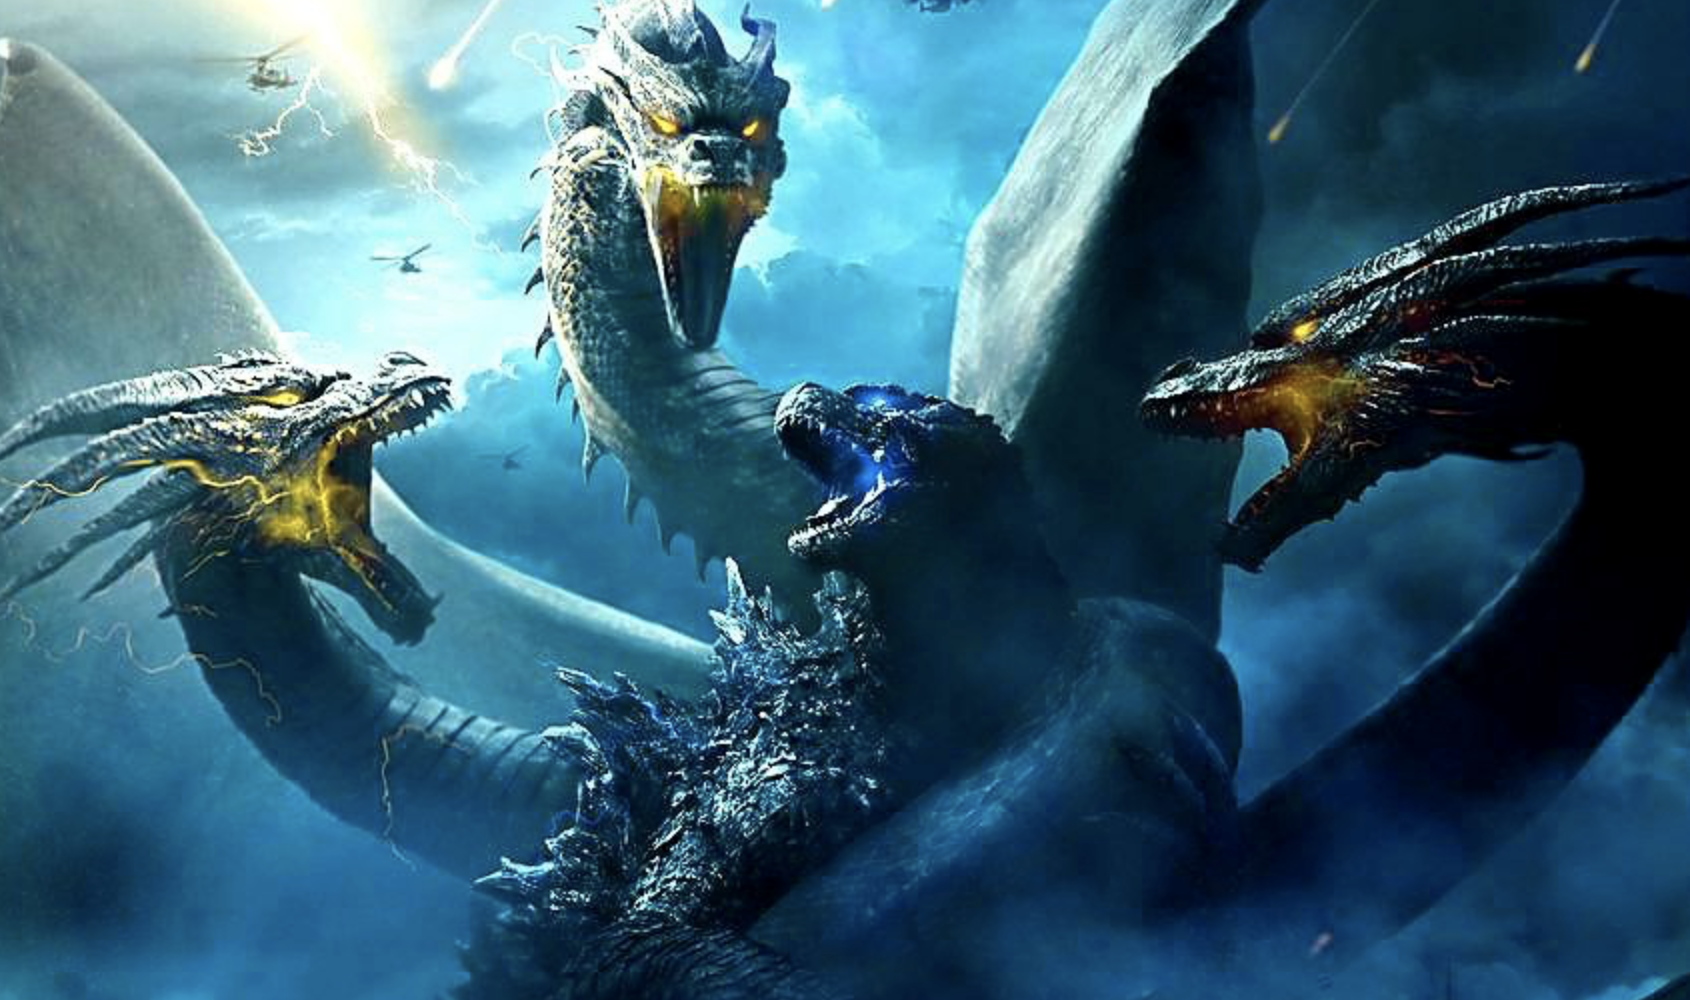 Diretor revela luta secreta com Ghidorah em Godzilla 2